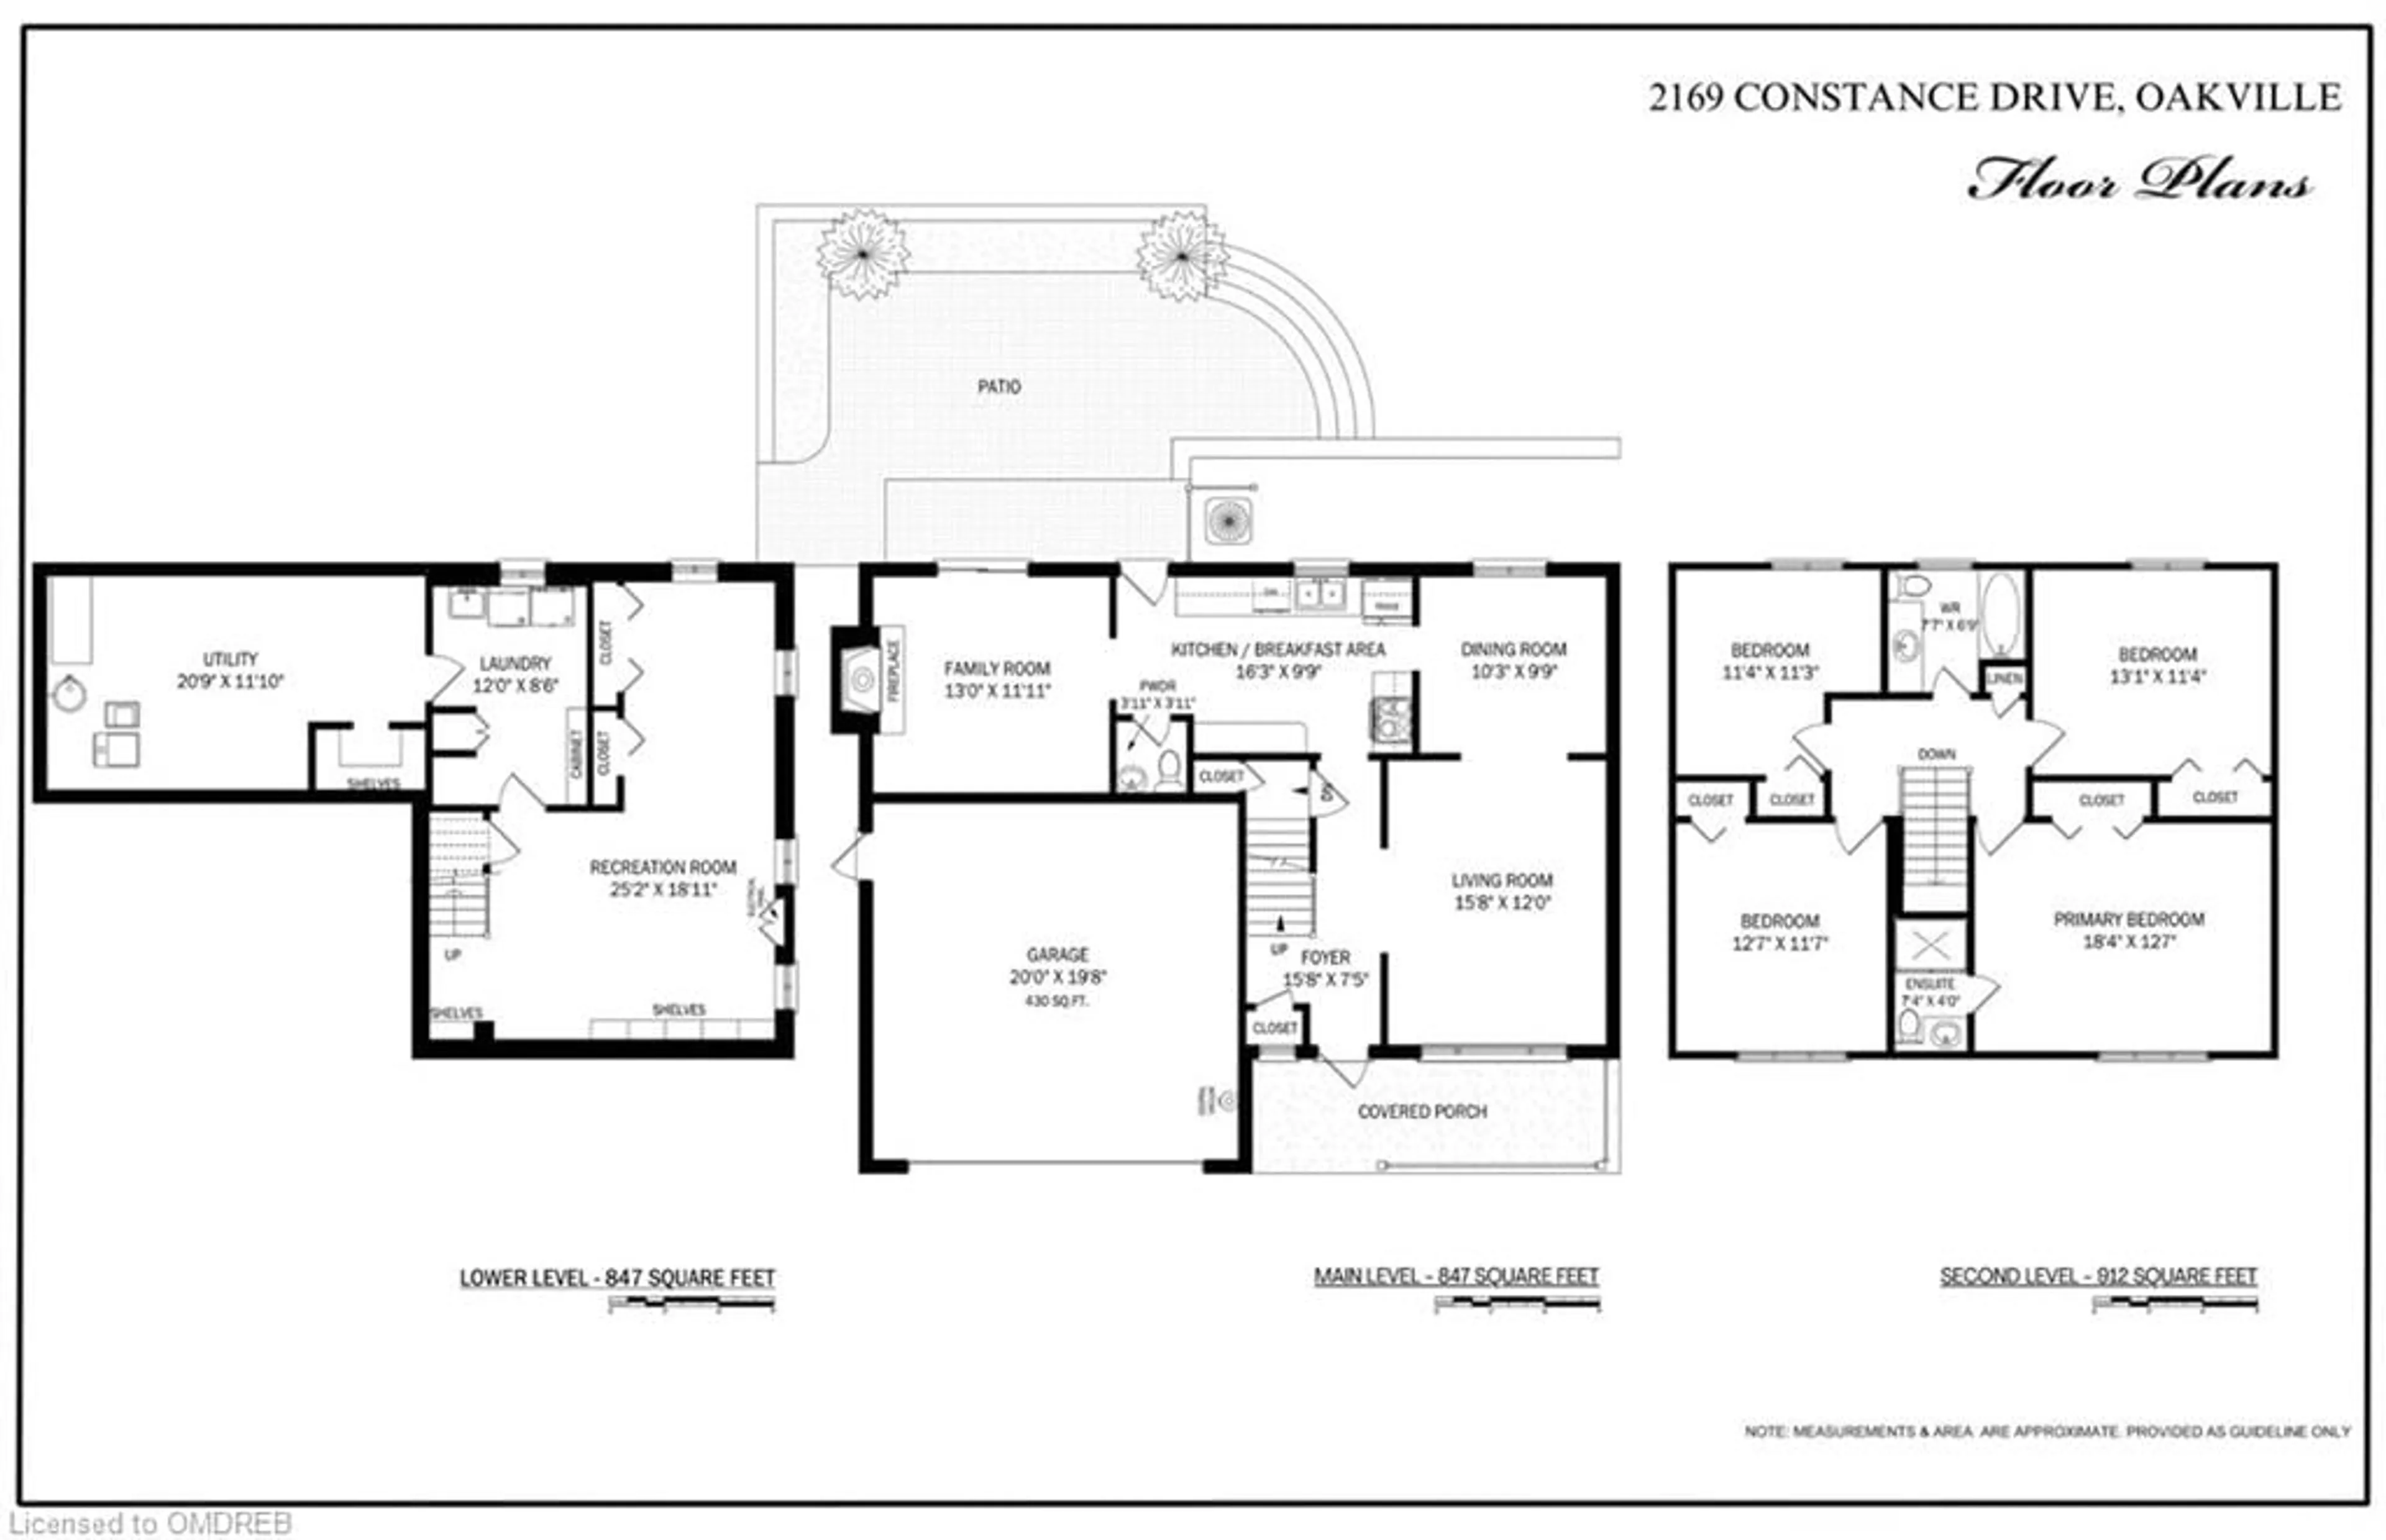 Floor plan for 2169 Constance Dr, Oakville Ontario L6J 5L2